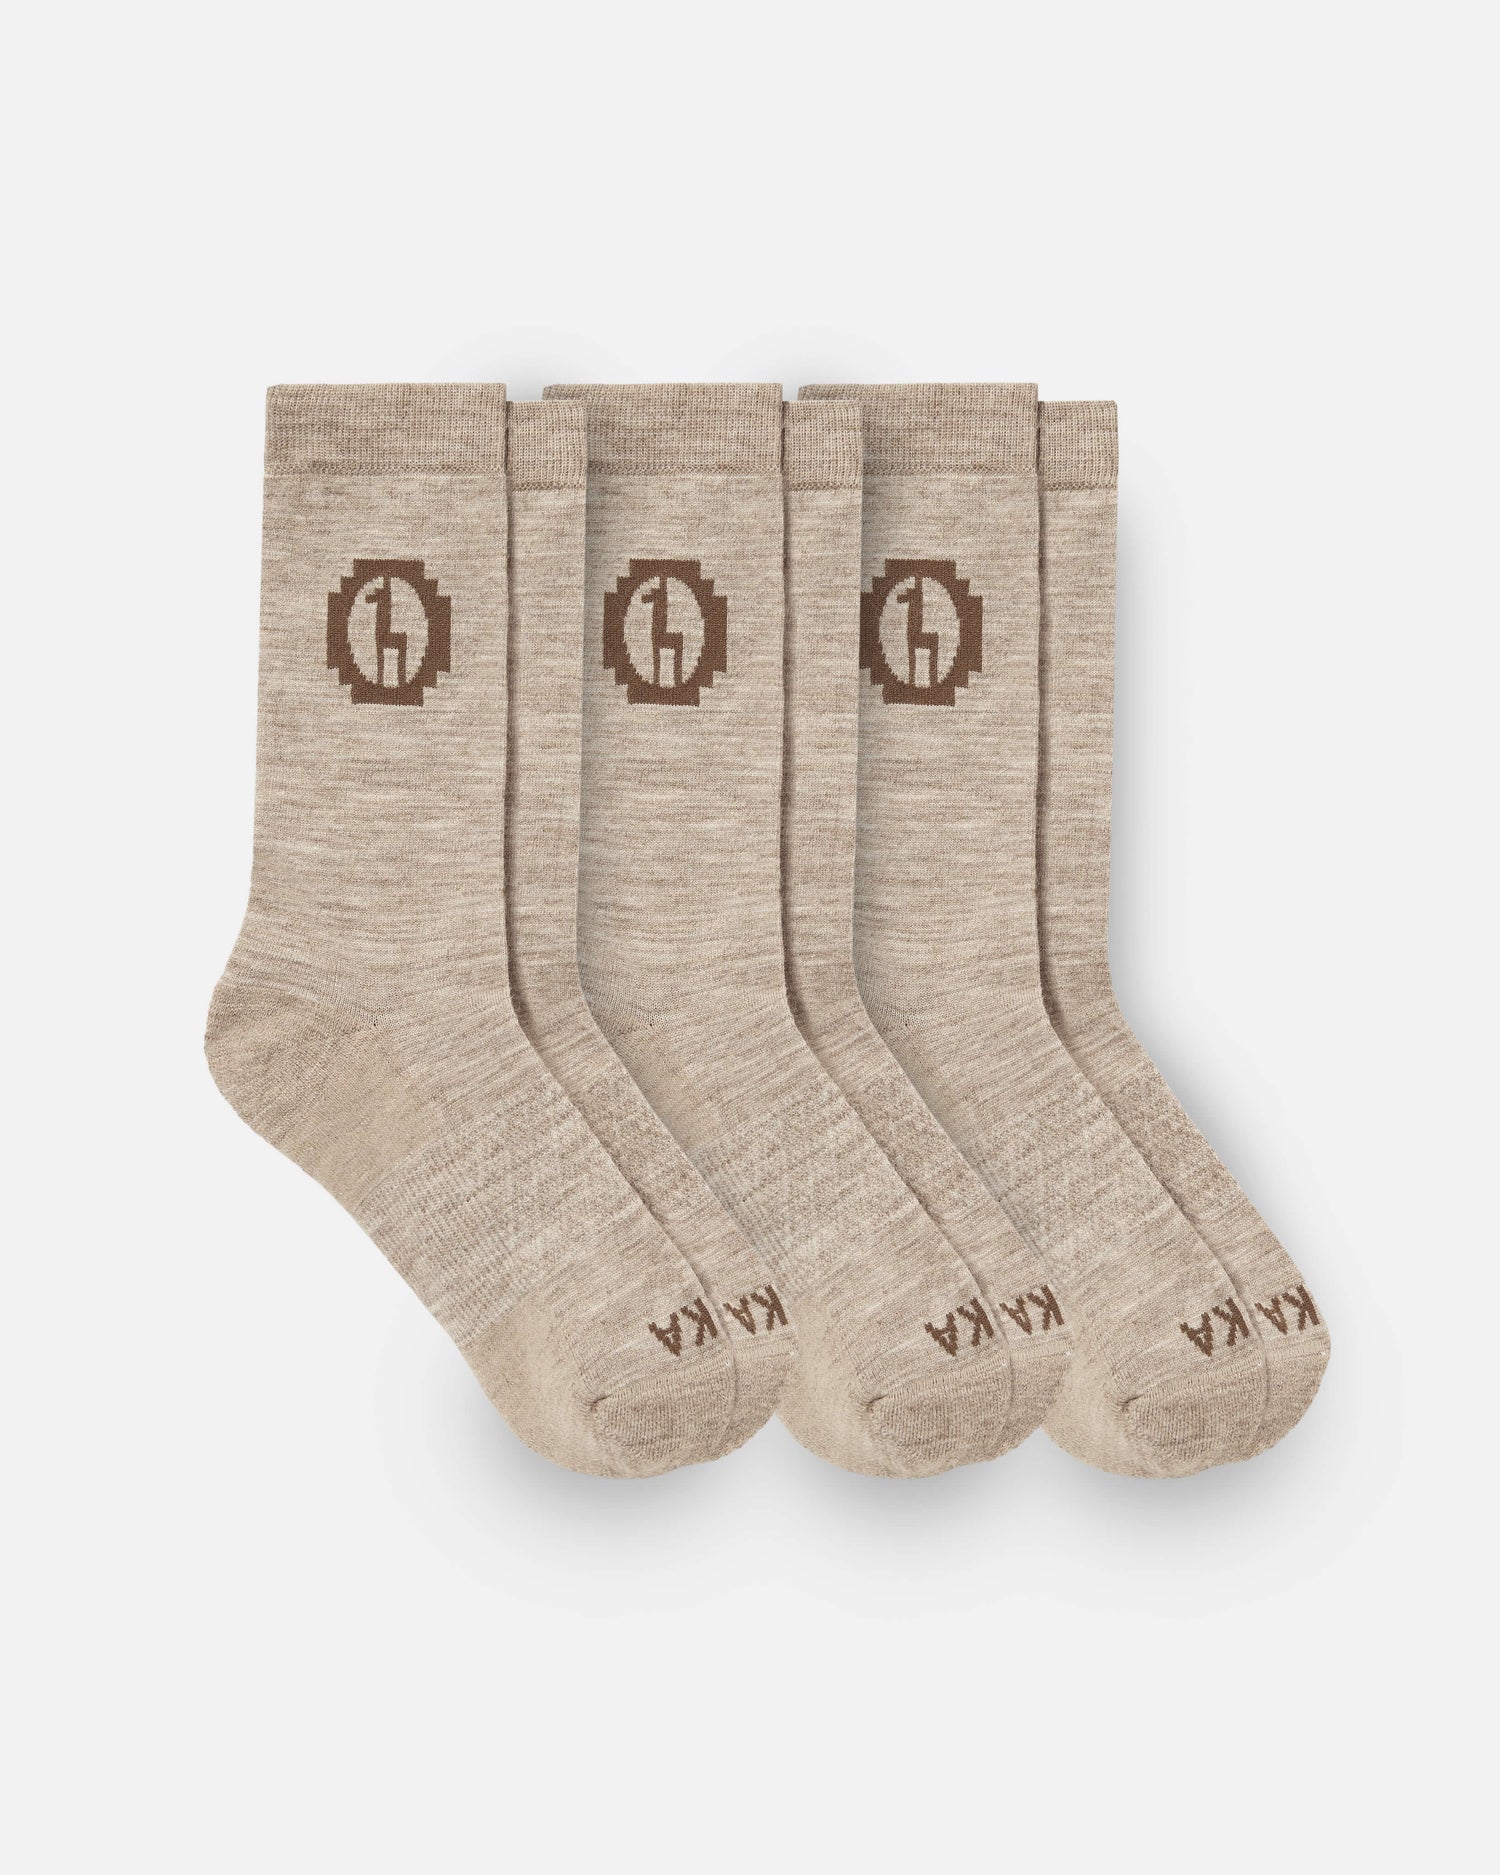 KAPPA® men cotton sport socks, 3 pack